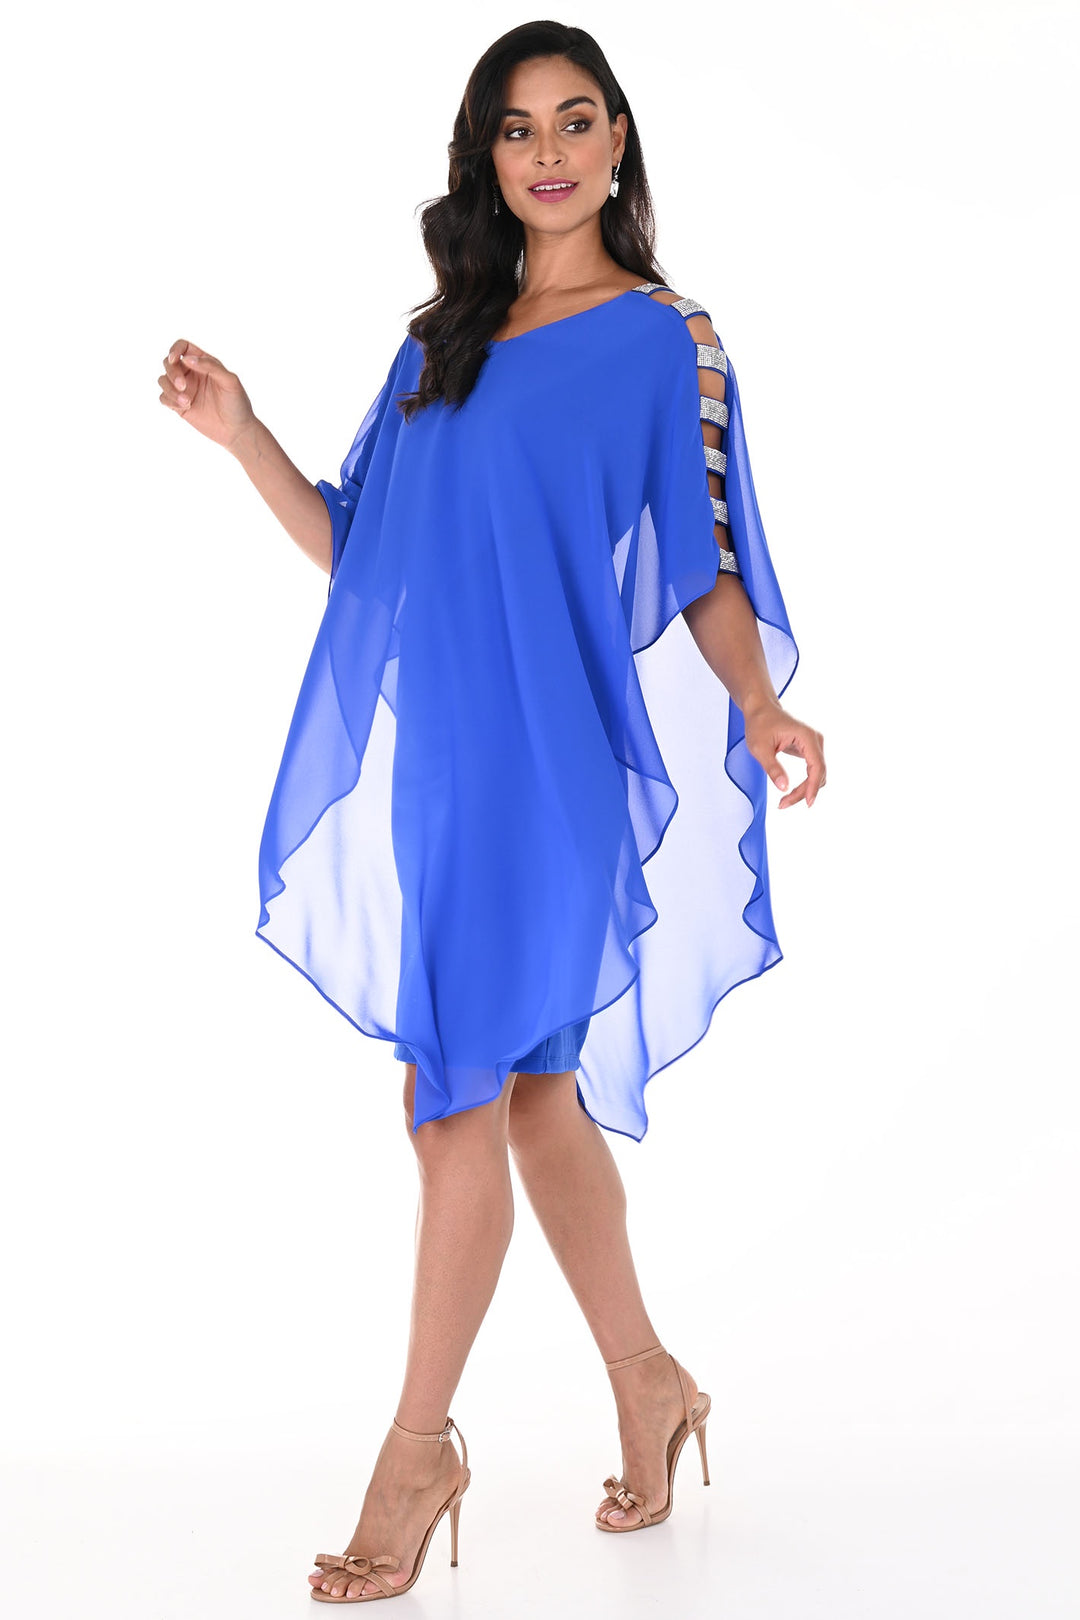 Frank Lyman 248297 Azure Blue Chiffon Overlay Occasion Dress - Dotique